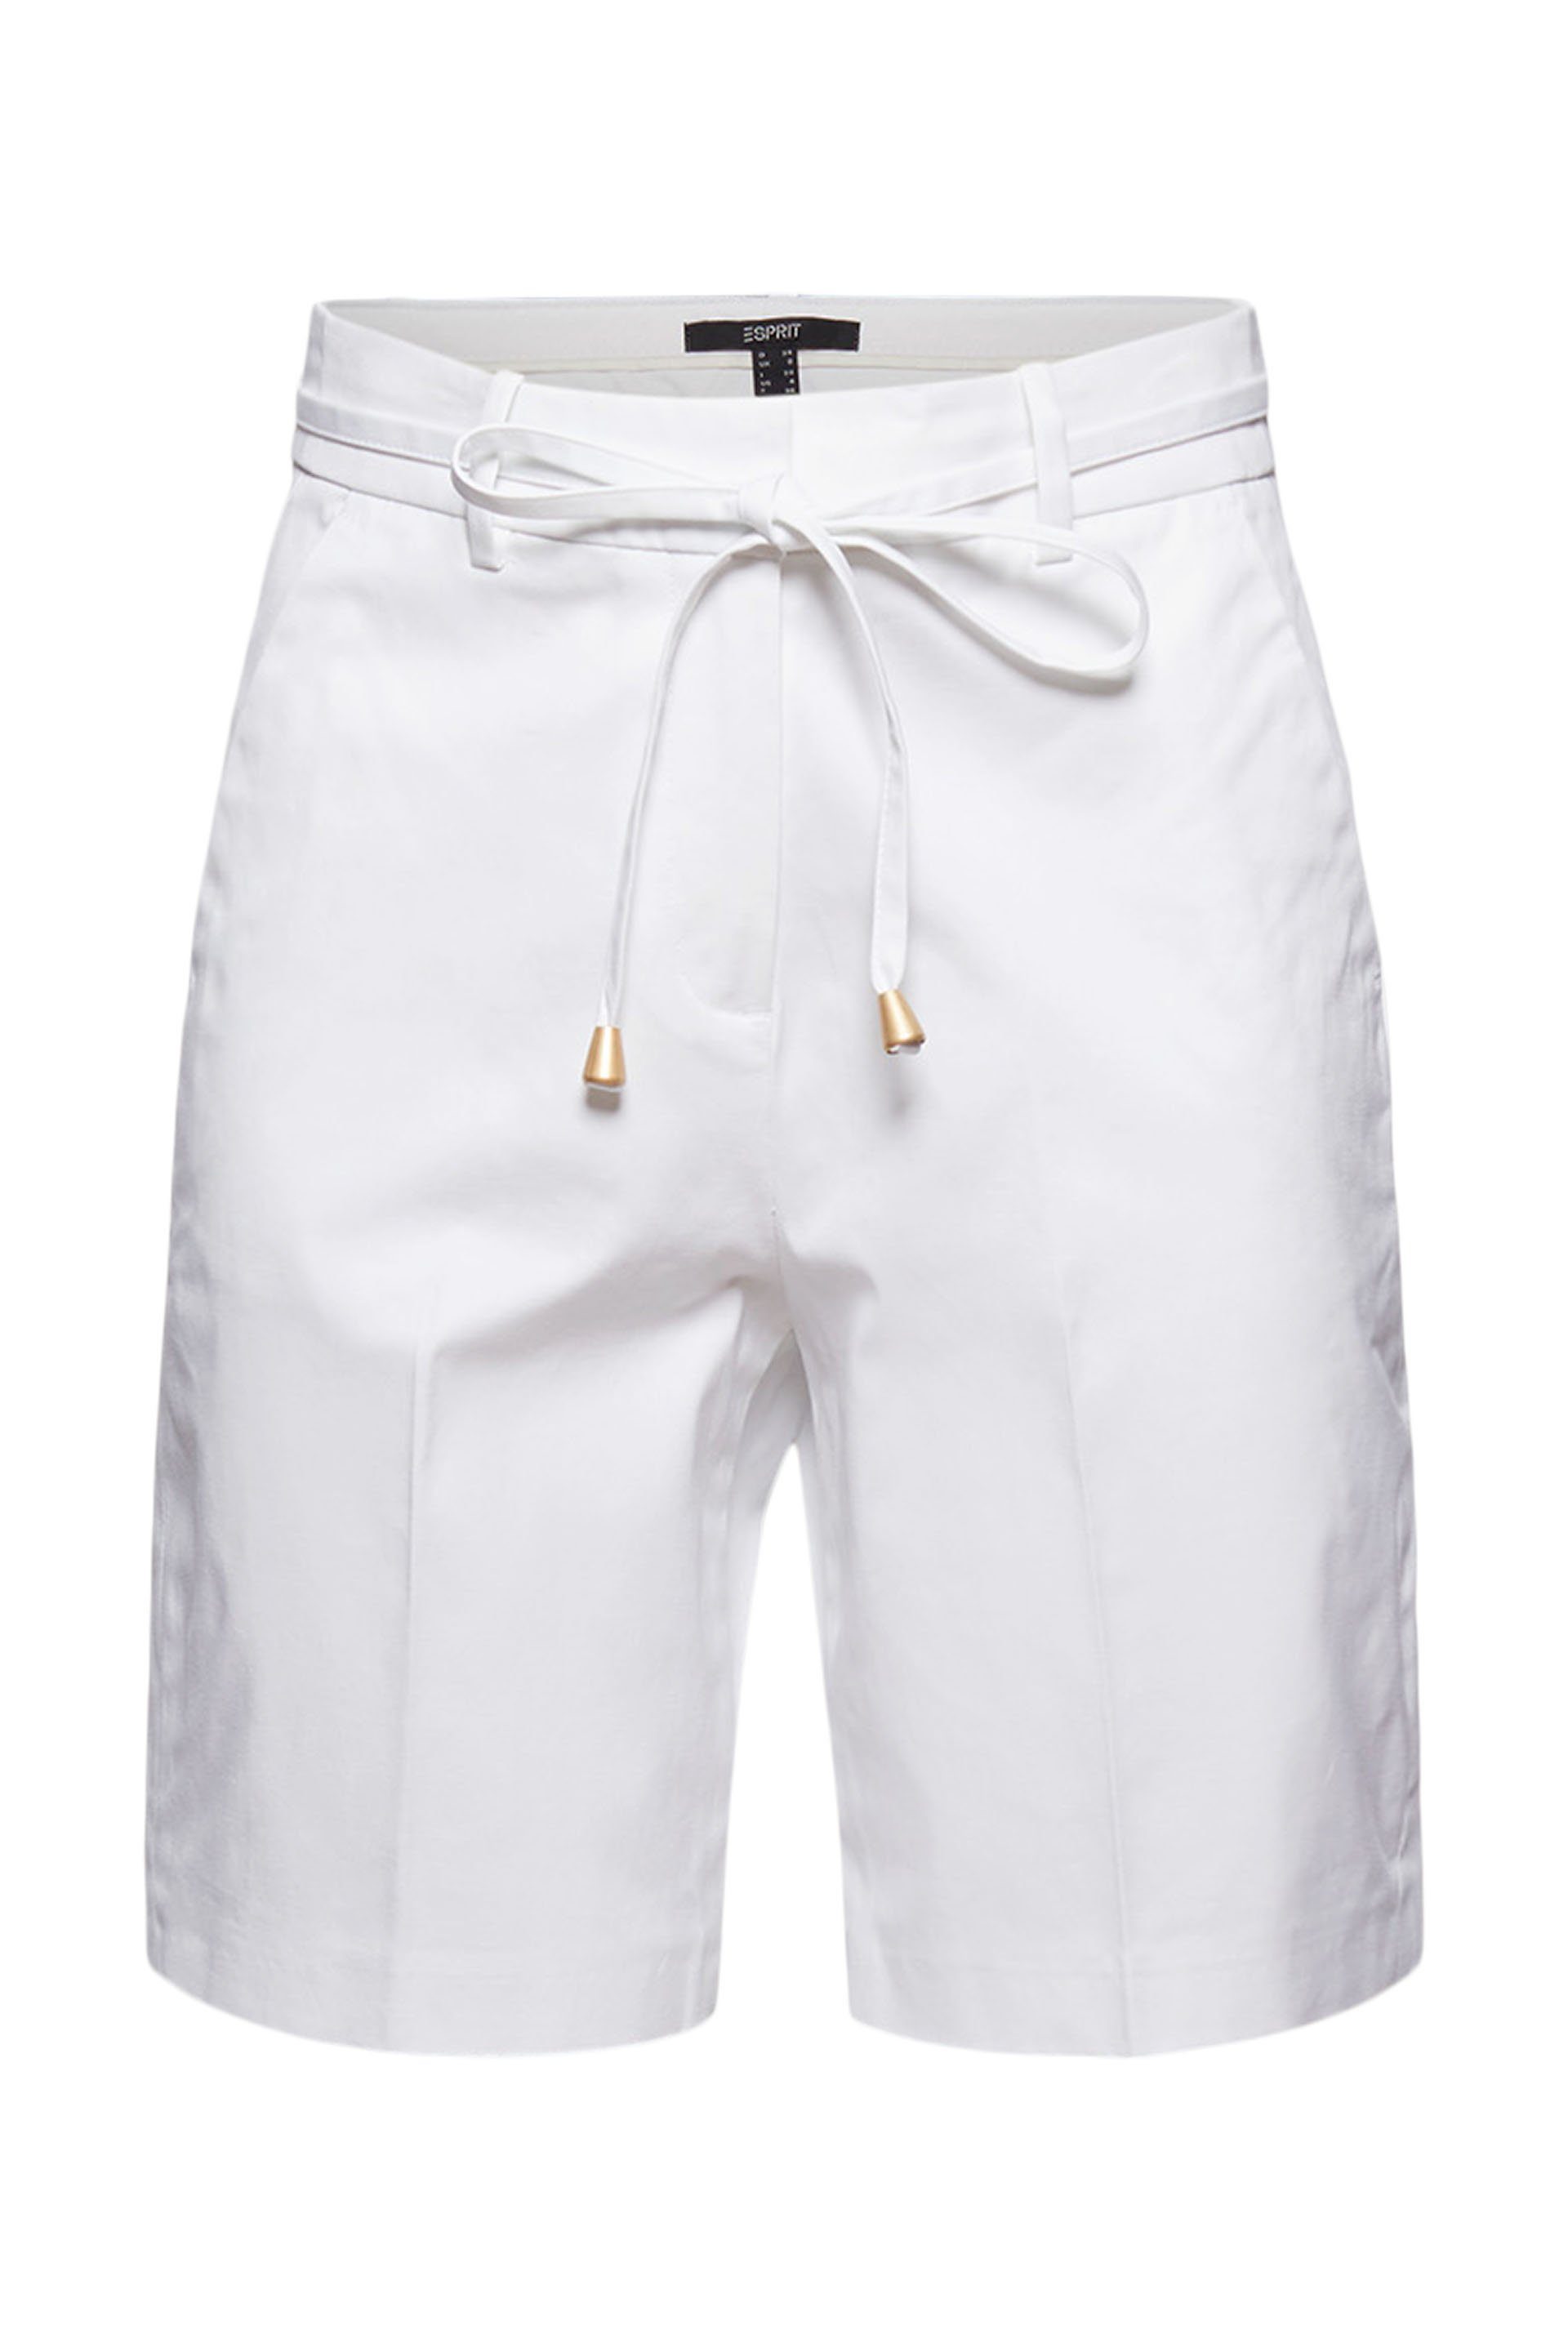 Esprit Collection Shorts white